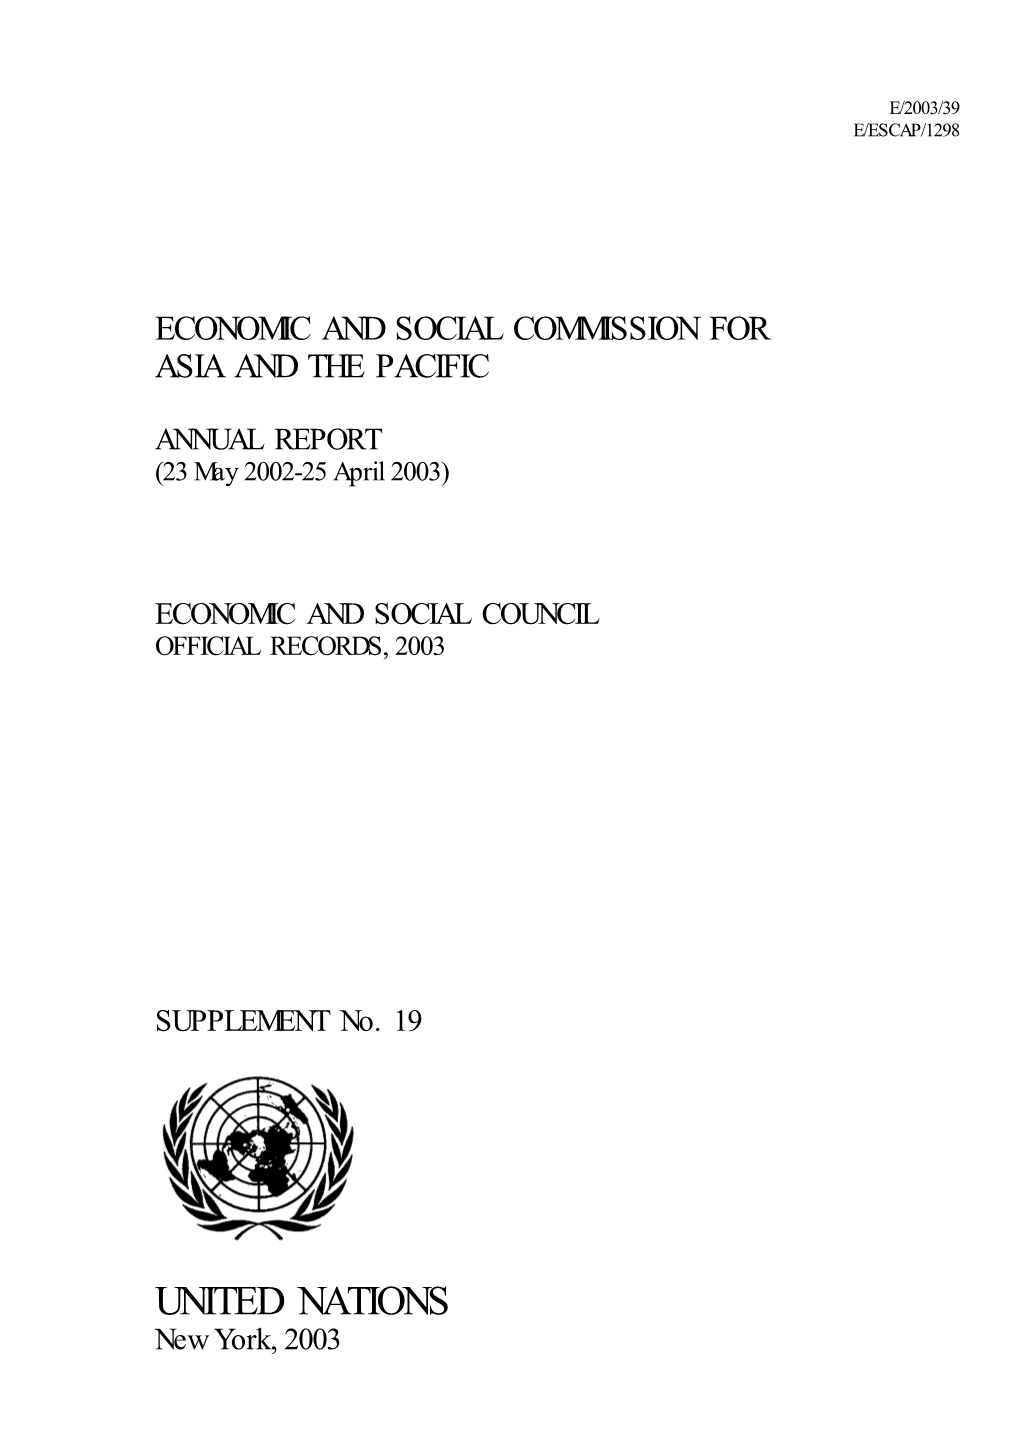 UNITED NATIONS New York, 2003